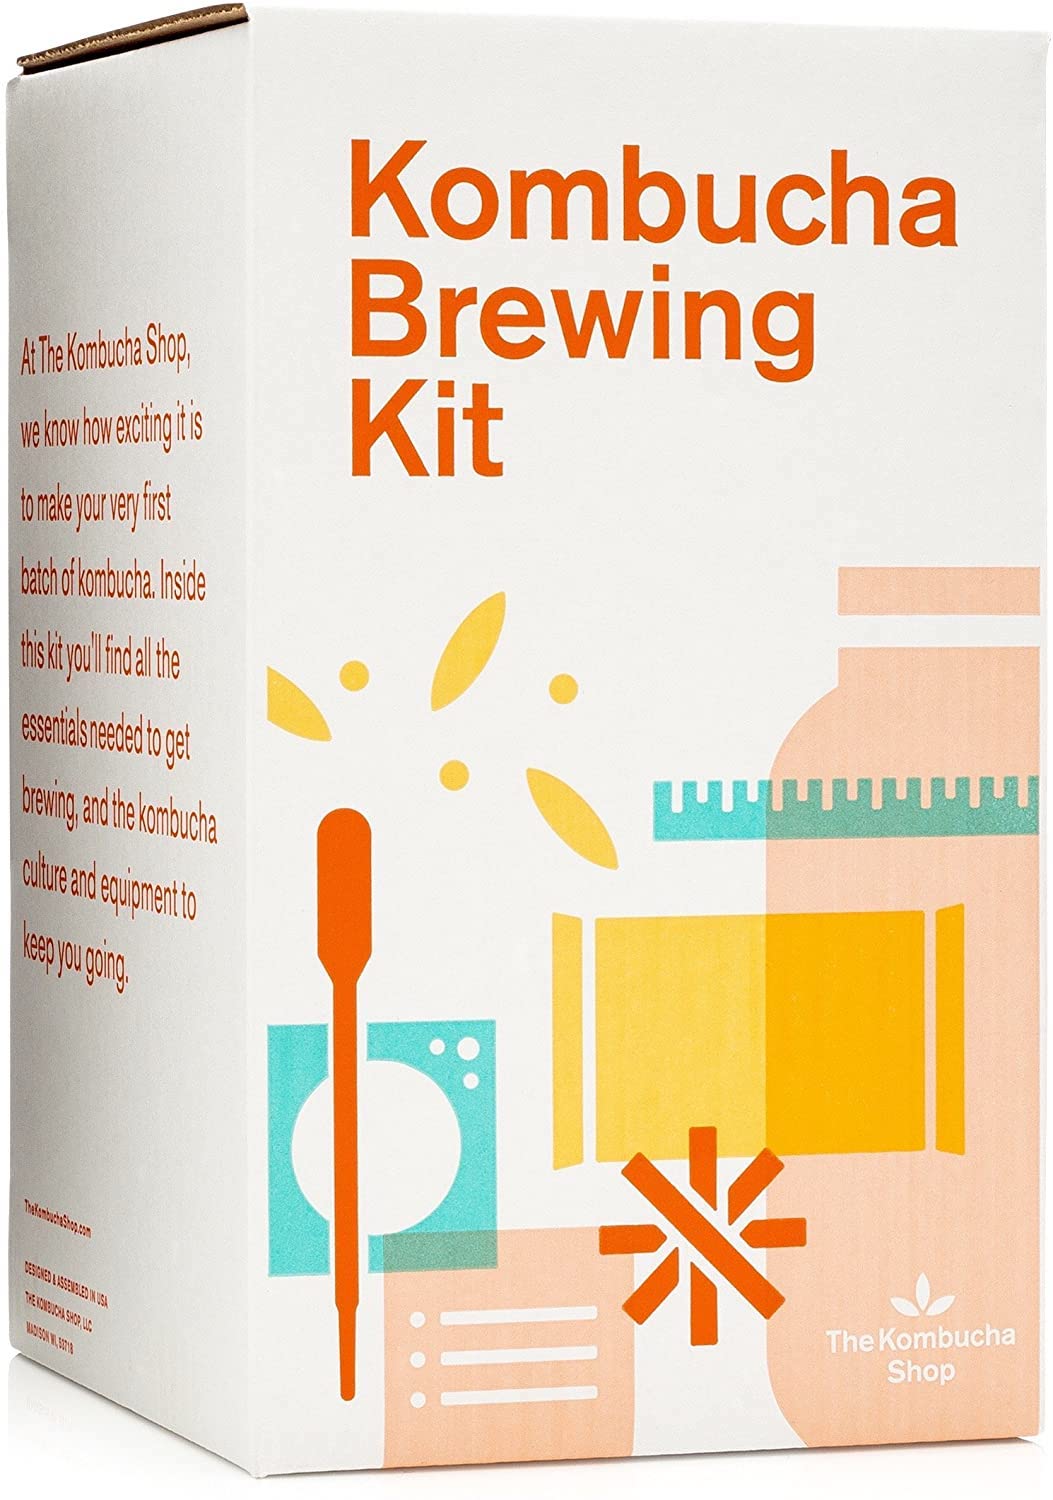 Kombucha brewing kit. 